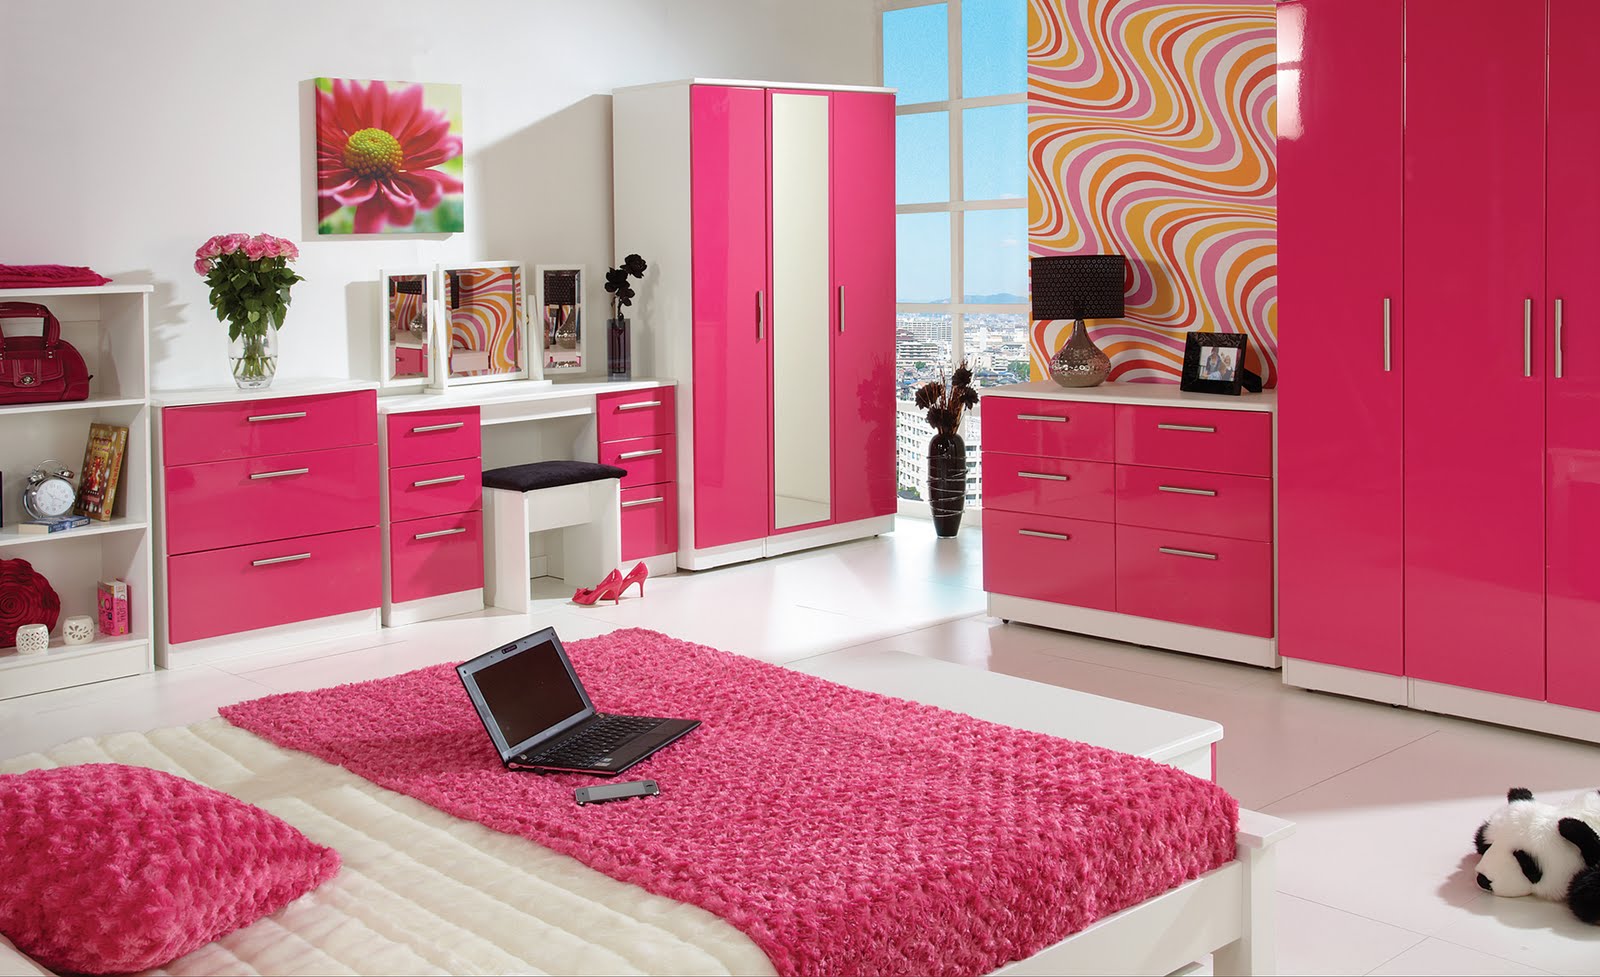 harga wallpaper dinding kamar tidur,bedroom,furniture,room,pink,interior design